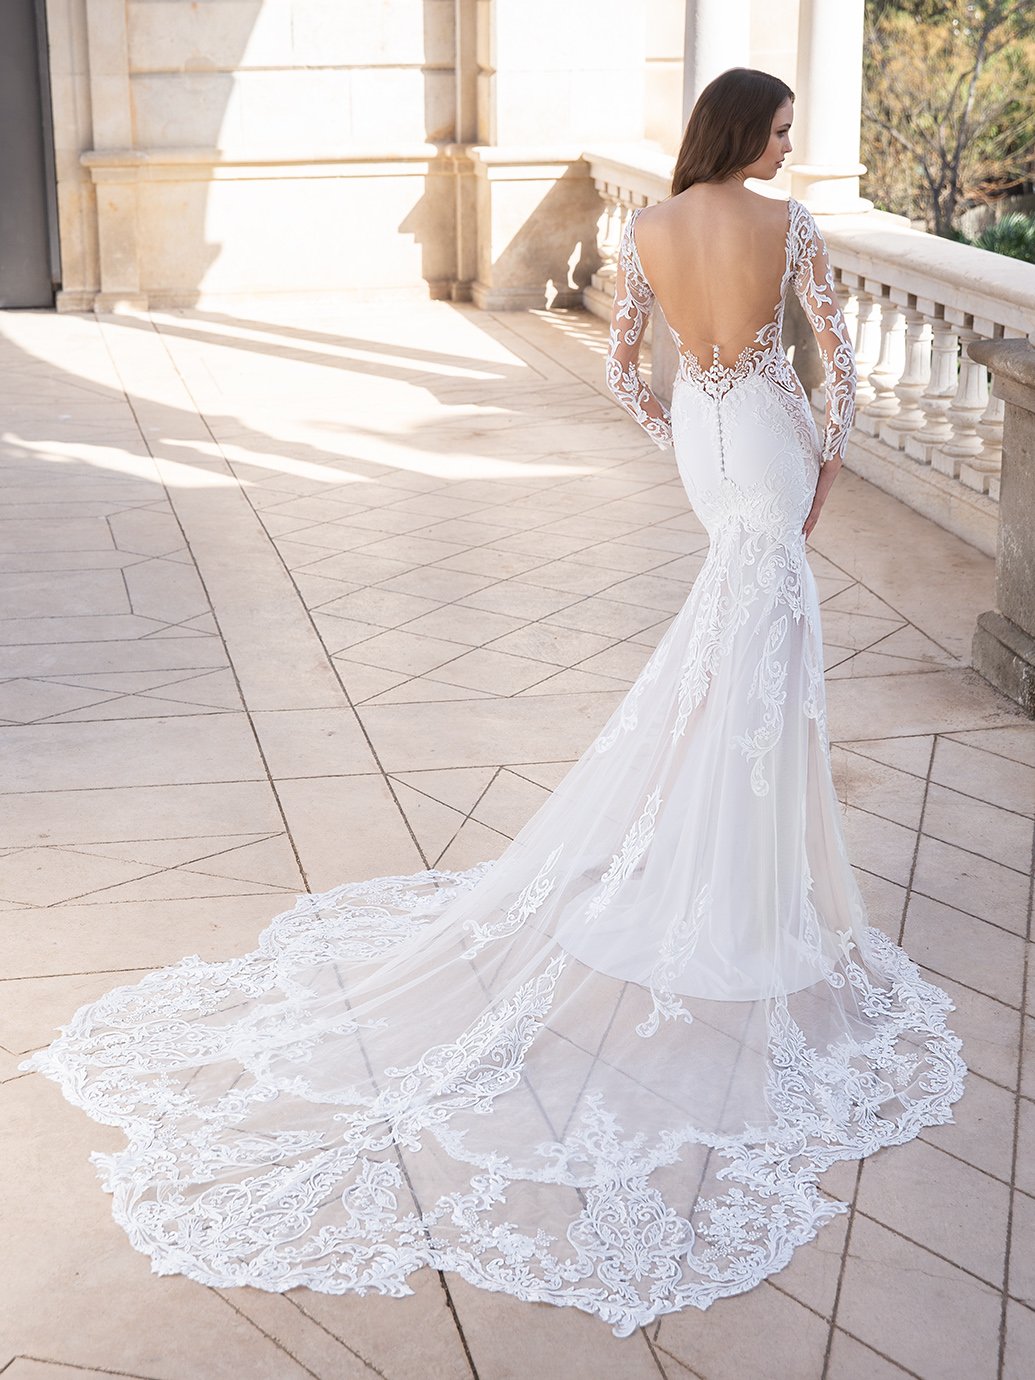 blanc-de-blanc-bridal-boutique-pittsburgh-cleveland-dress-wedding-gown-elysee-avignon.jpg